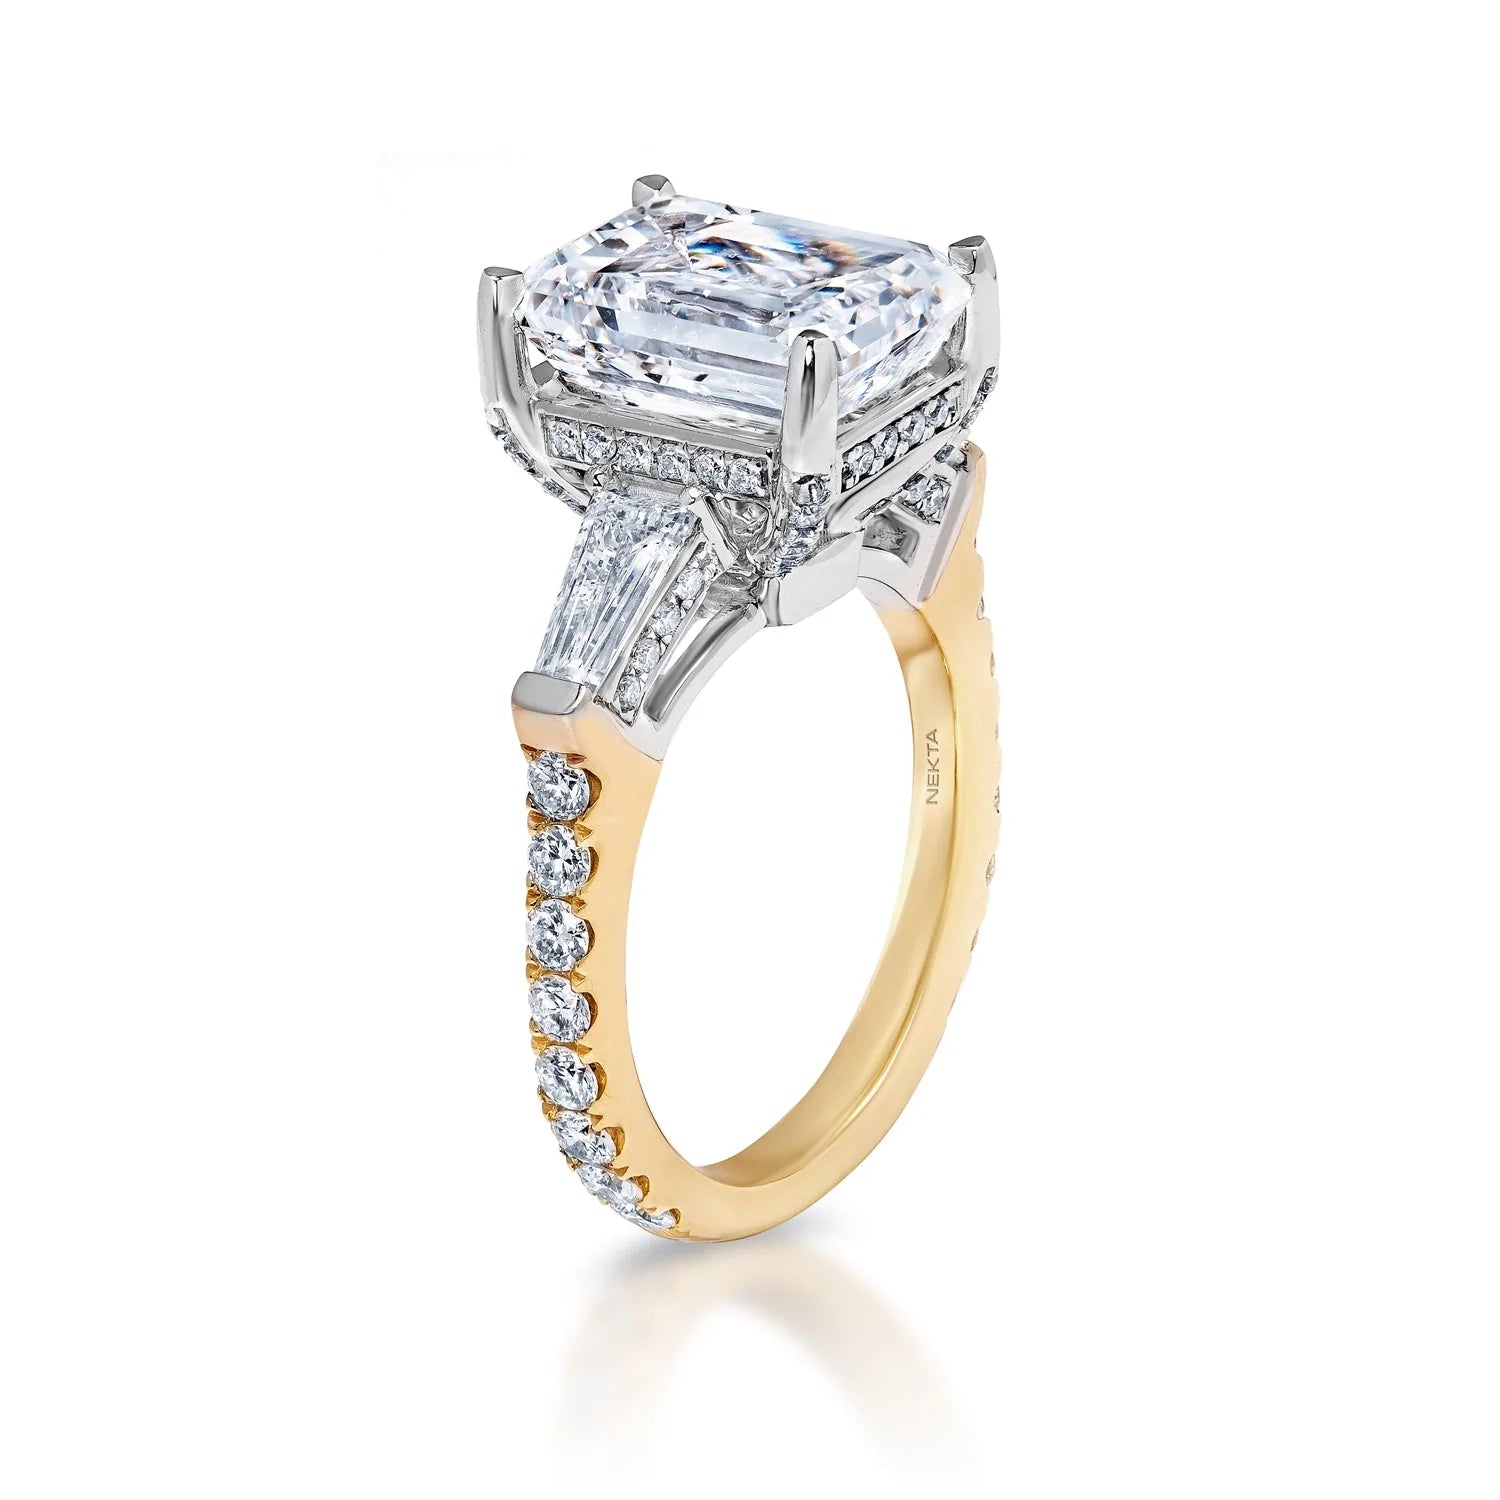 Leylani 7 Carat E VVS2 Emerald Cut Lab Grown Diamond Engagement Ring in 18k White & Yellow Gold Side View